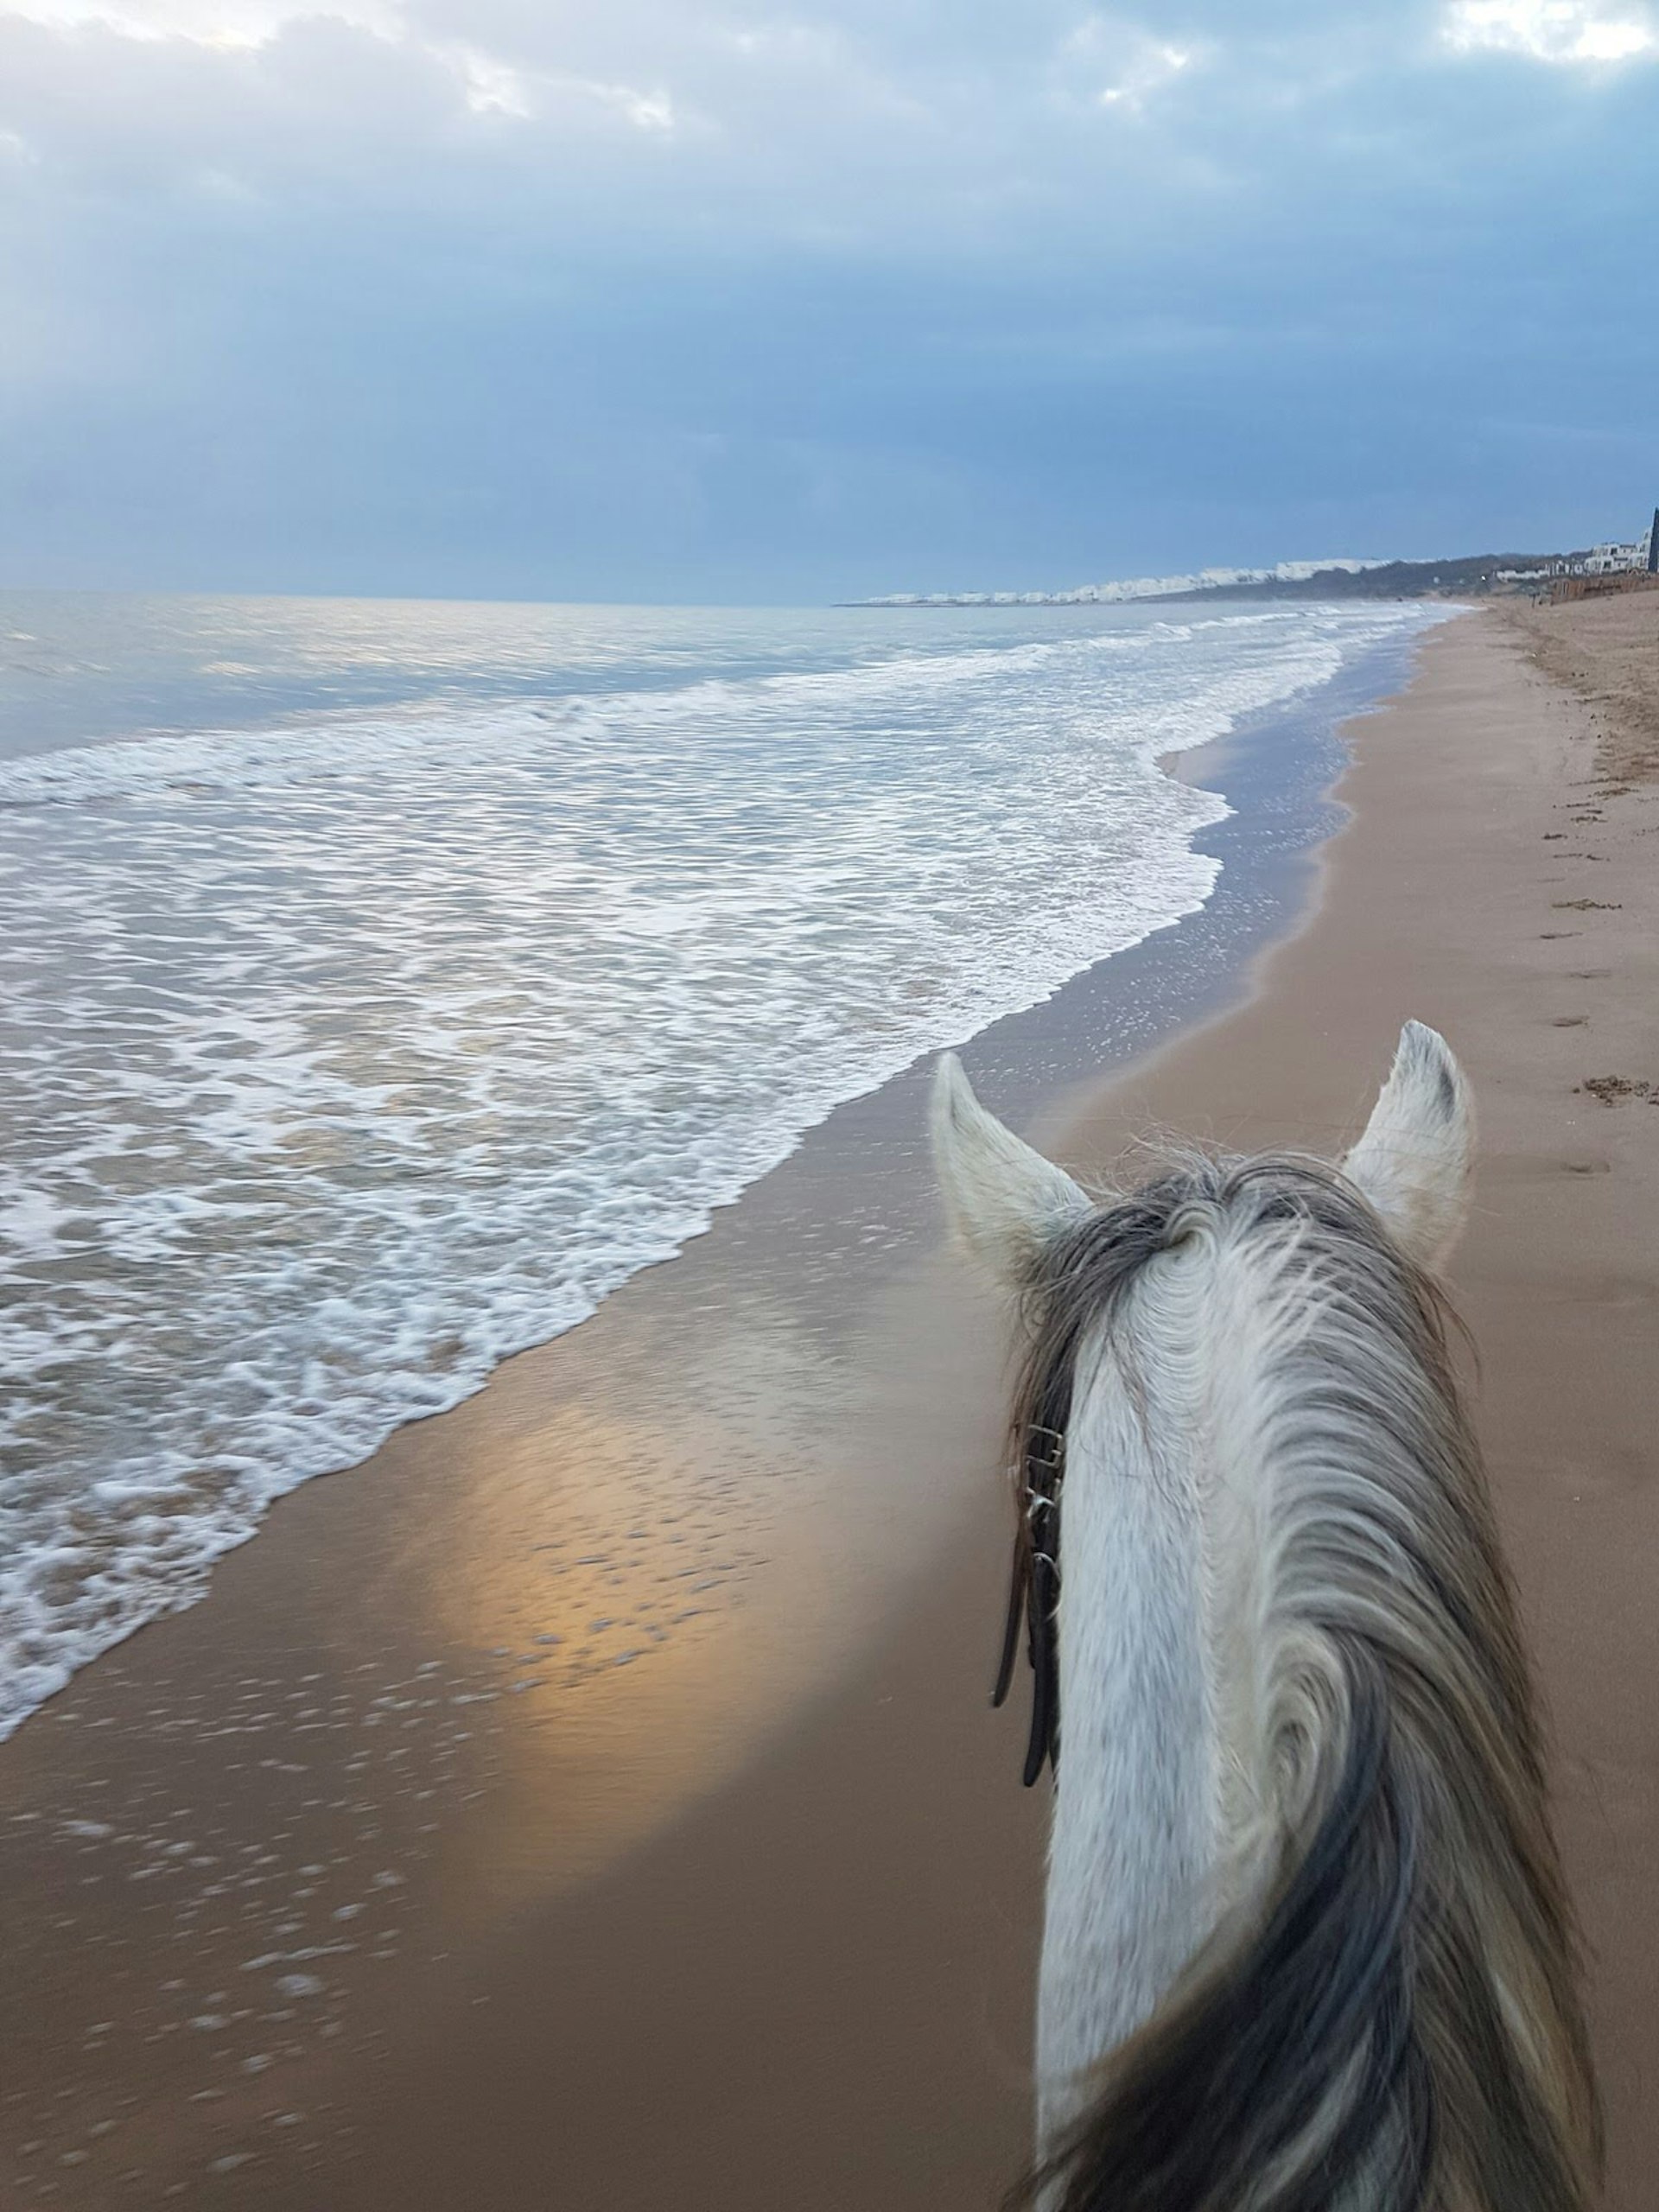 On horseback on the beach in Gammarth, Tunis, Tunisia © Erin Harvey / Lonely Planet